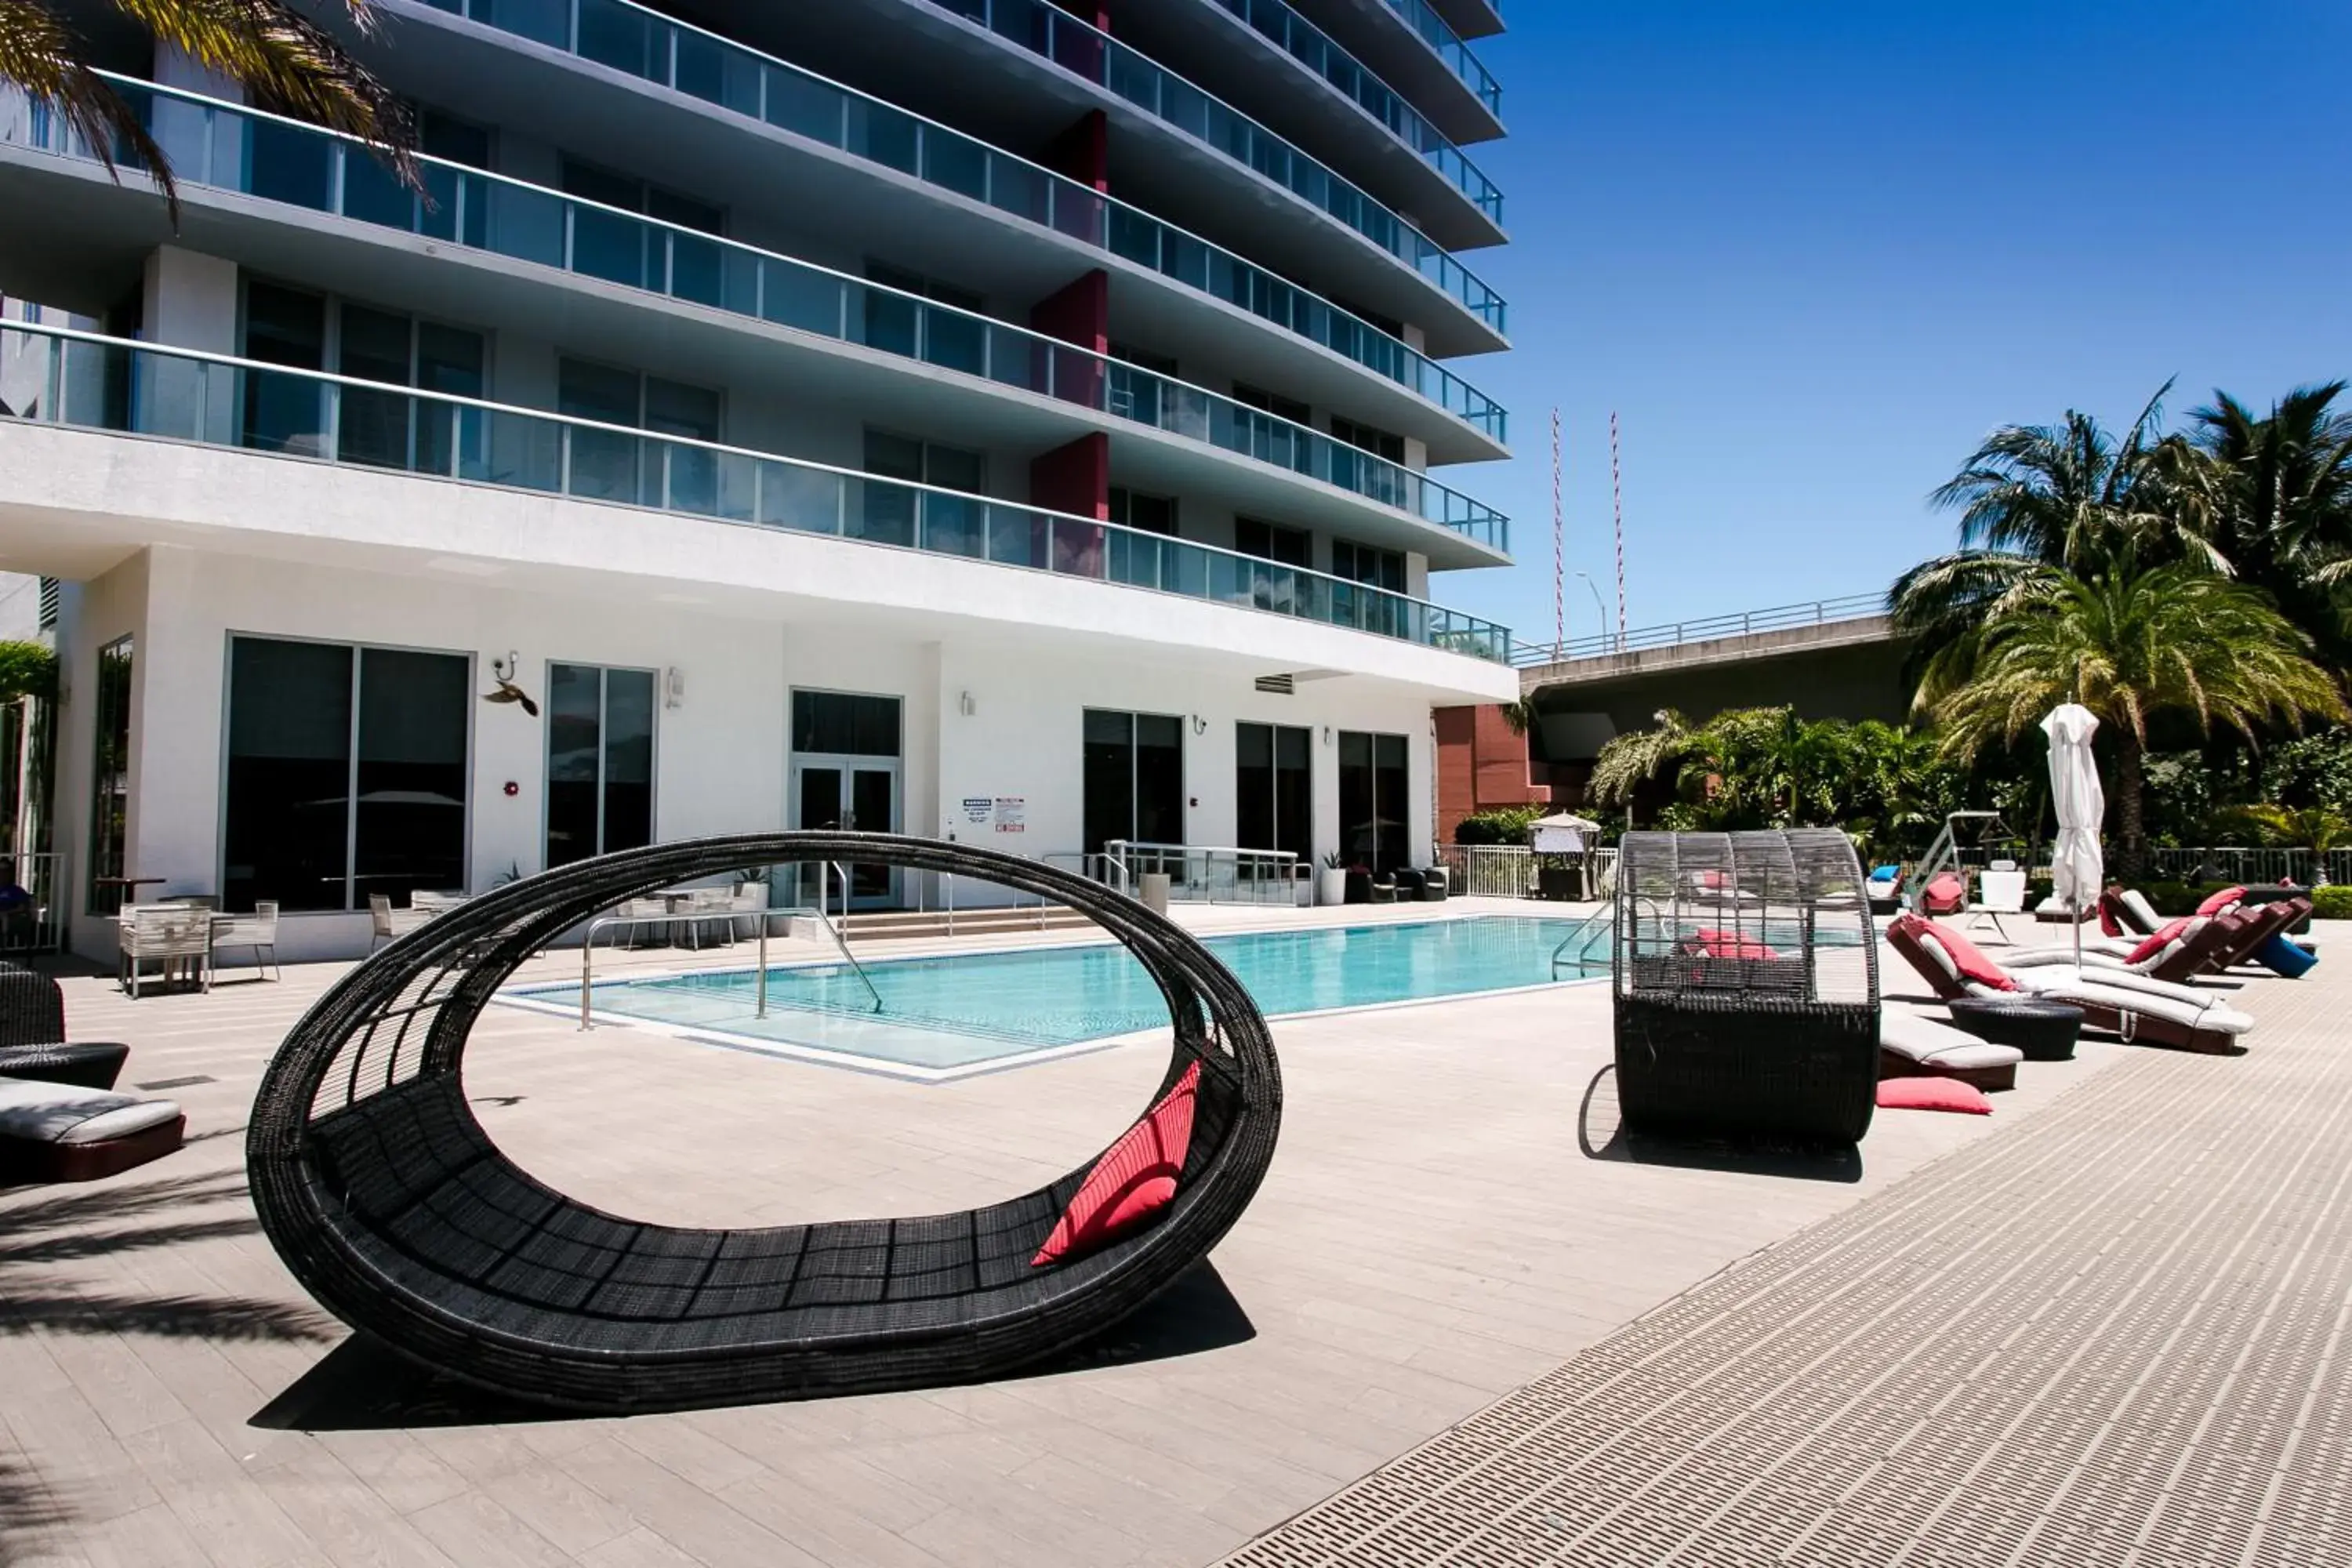 Swimming pool, Patio/Outdoor Area in Beachwalk Elite Hotels and Resort